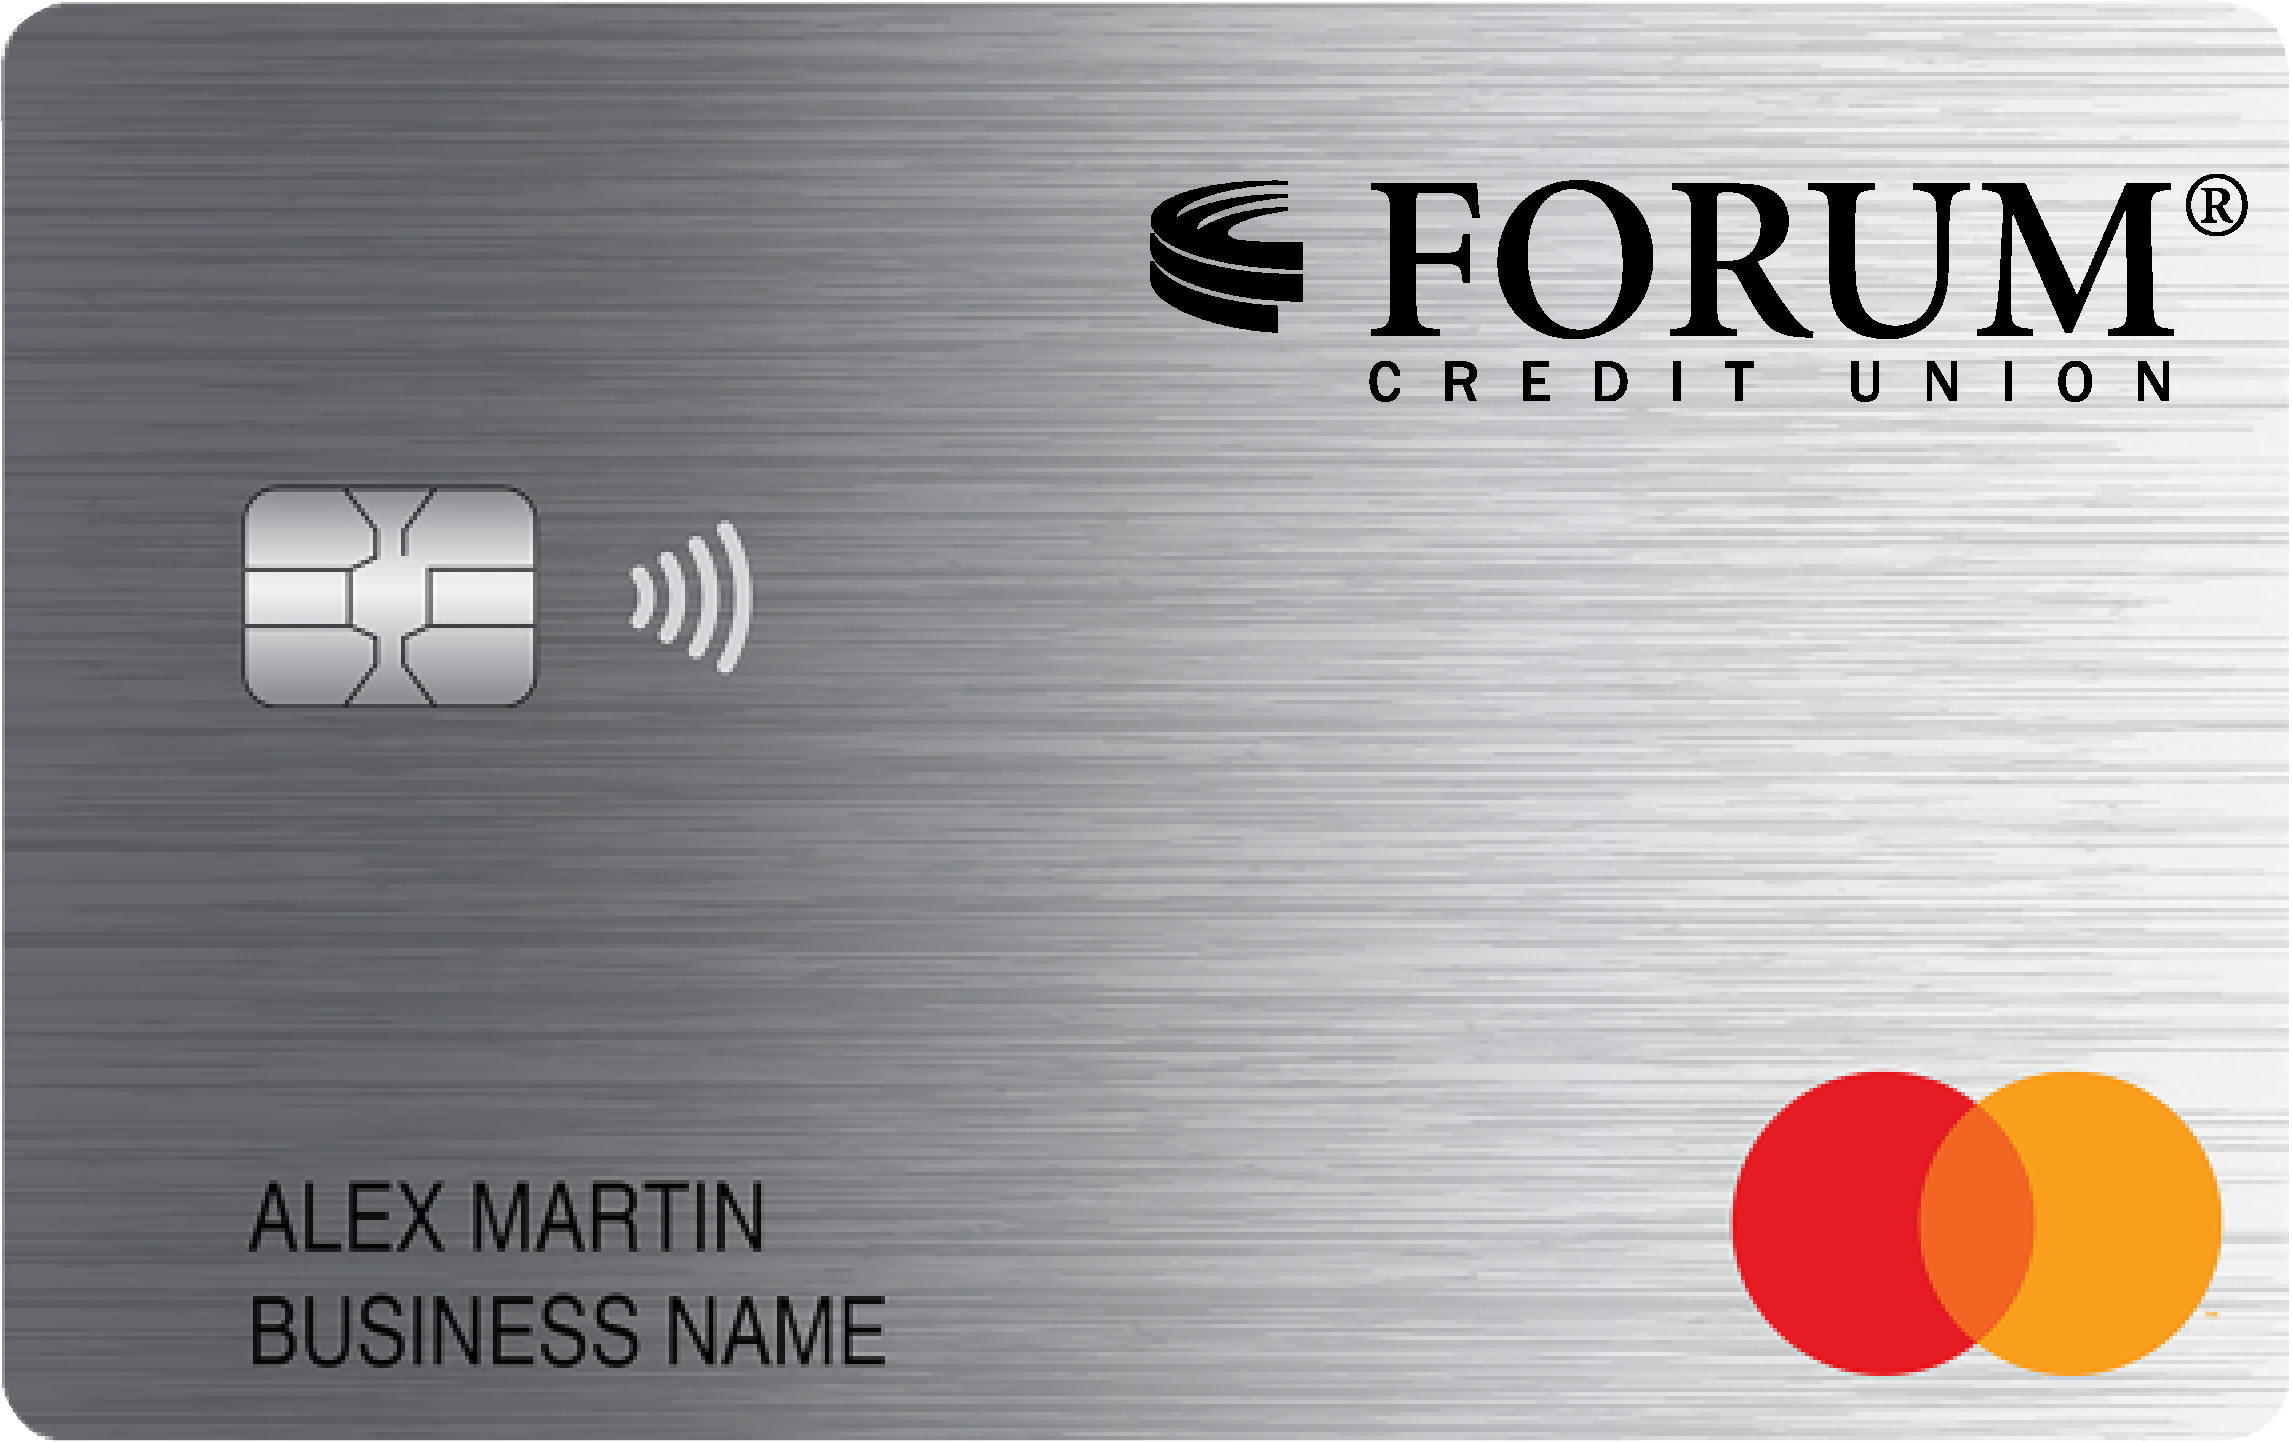 FORUM Credit Union Smart Business Rewards Card